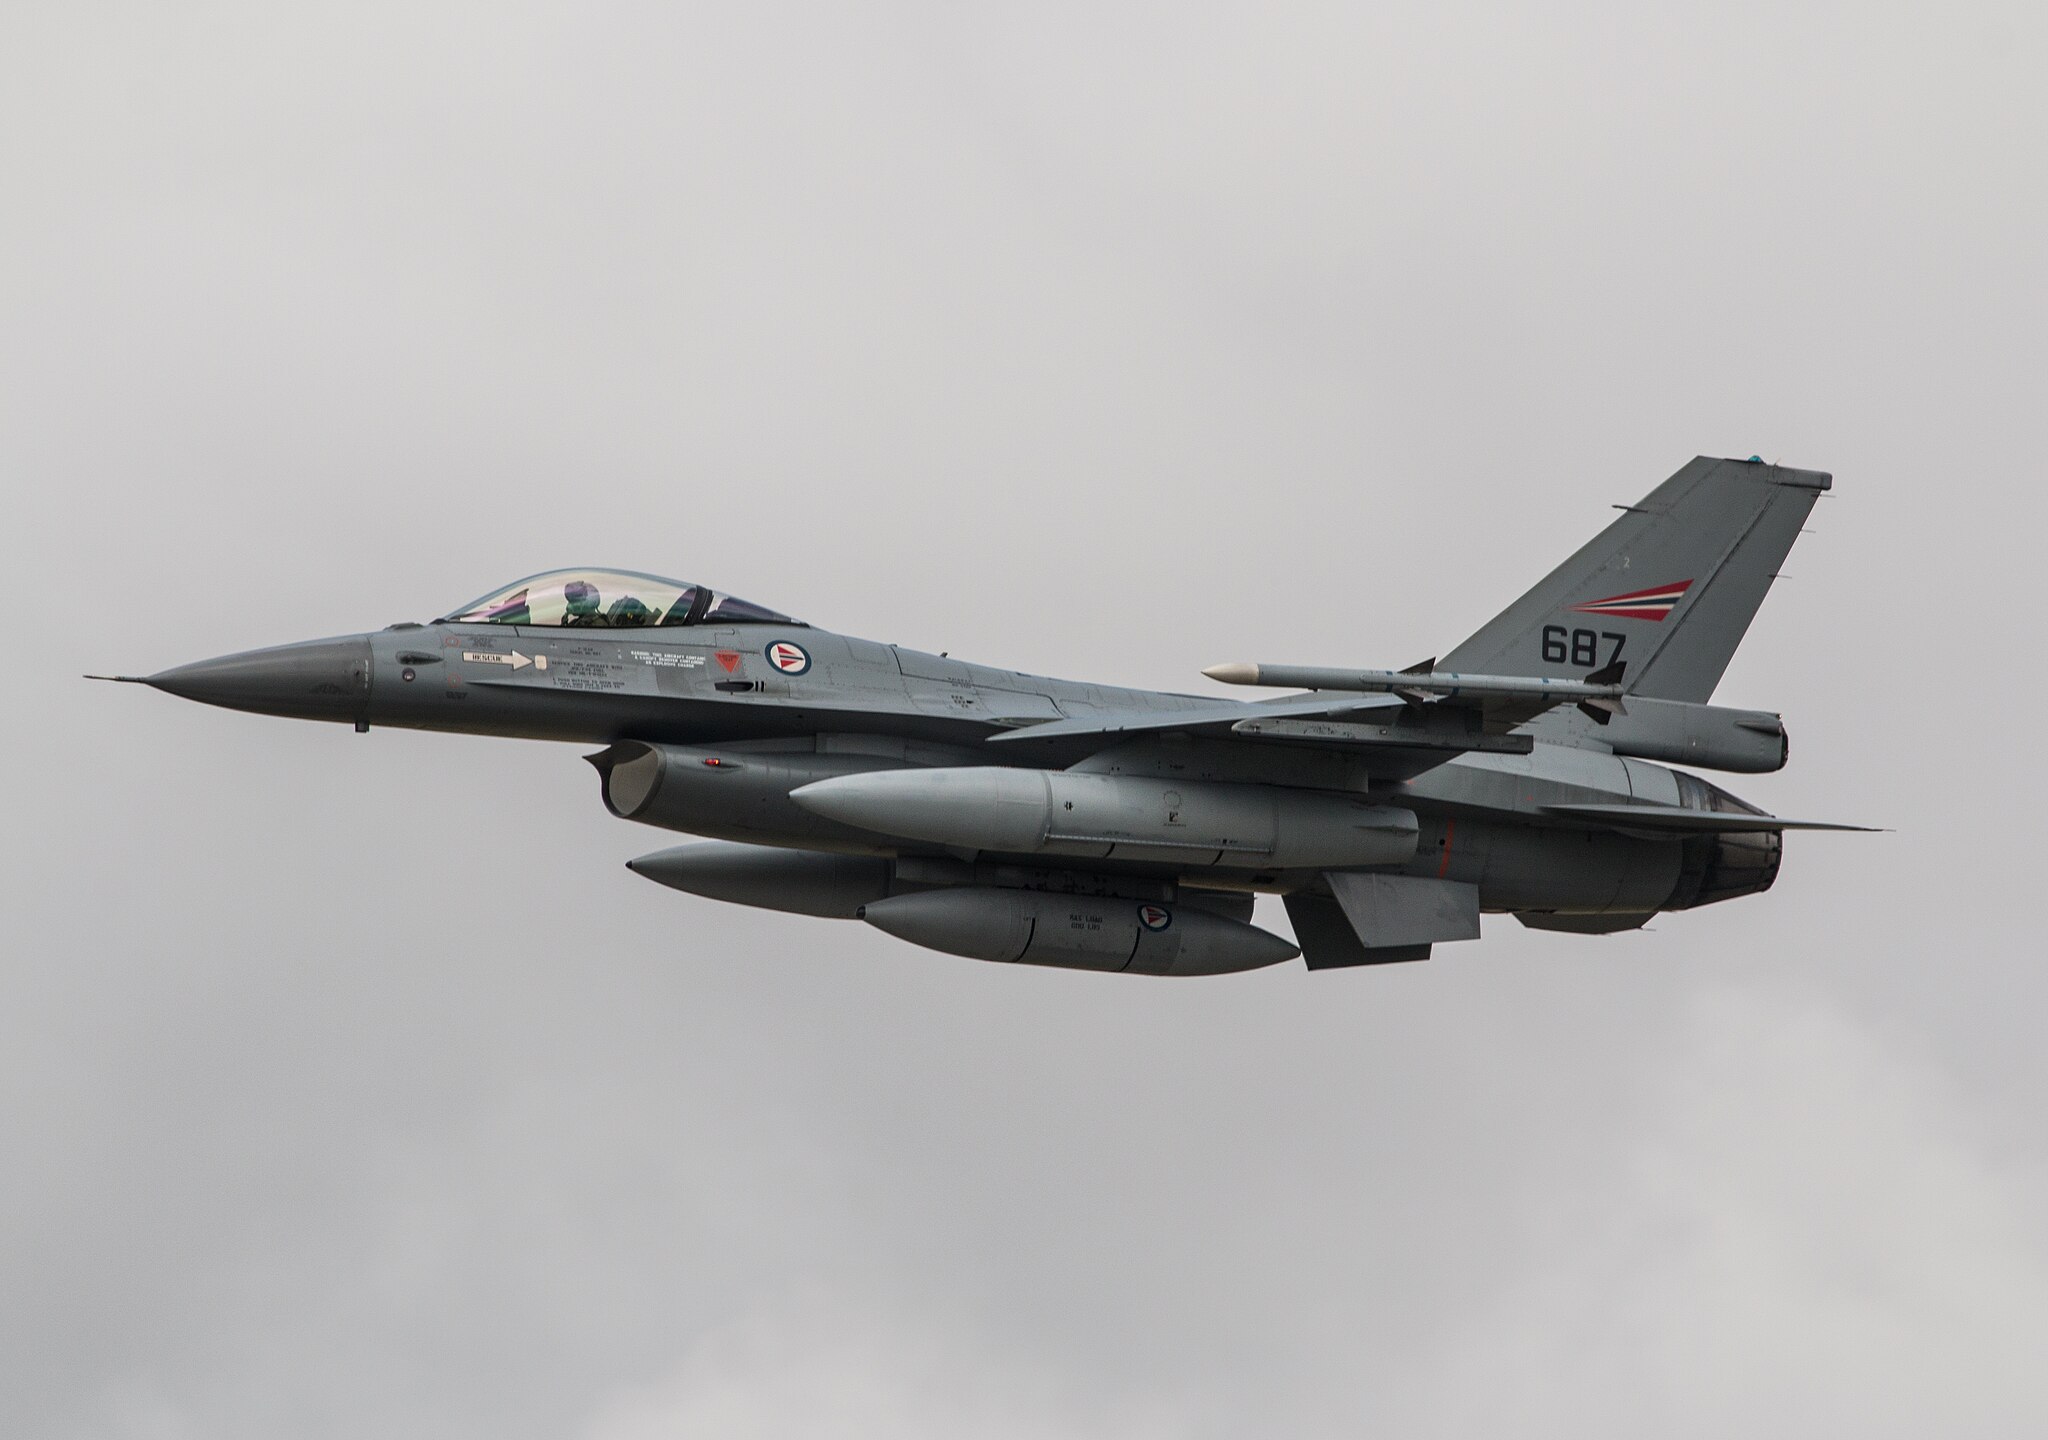 Bild: Steve Lynes from Sandshurst, United Kingdom, EGVA - General Dynamics F-16AM Fighting Falcon - Royal Danish Air Force - 687 (48392974512), CC BY 2.0, via Wikimedia Commons, (keine Änderungen vorgenommen)